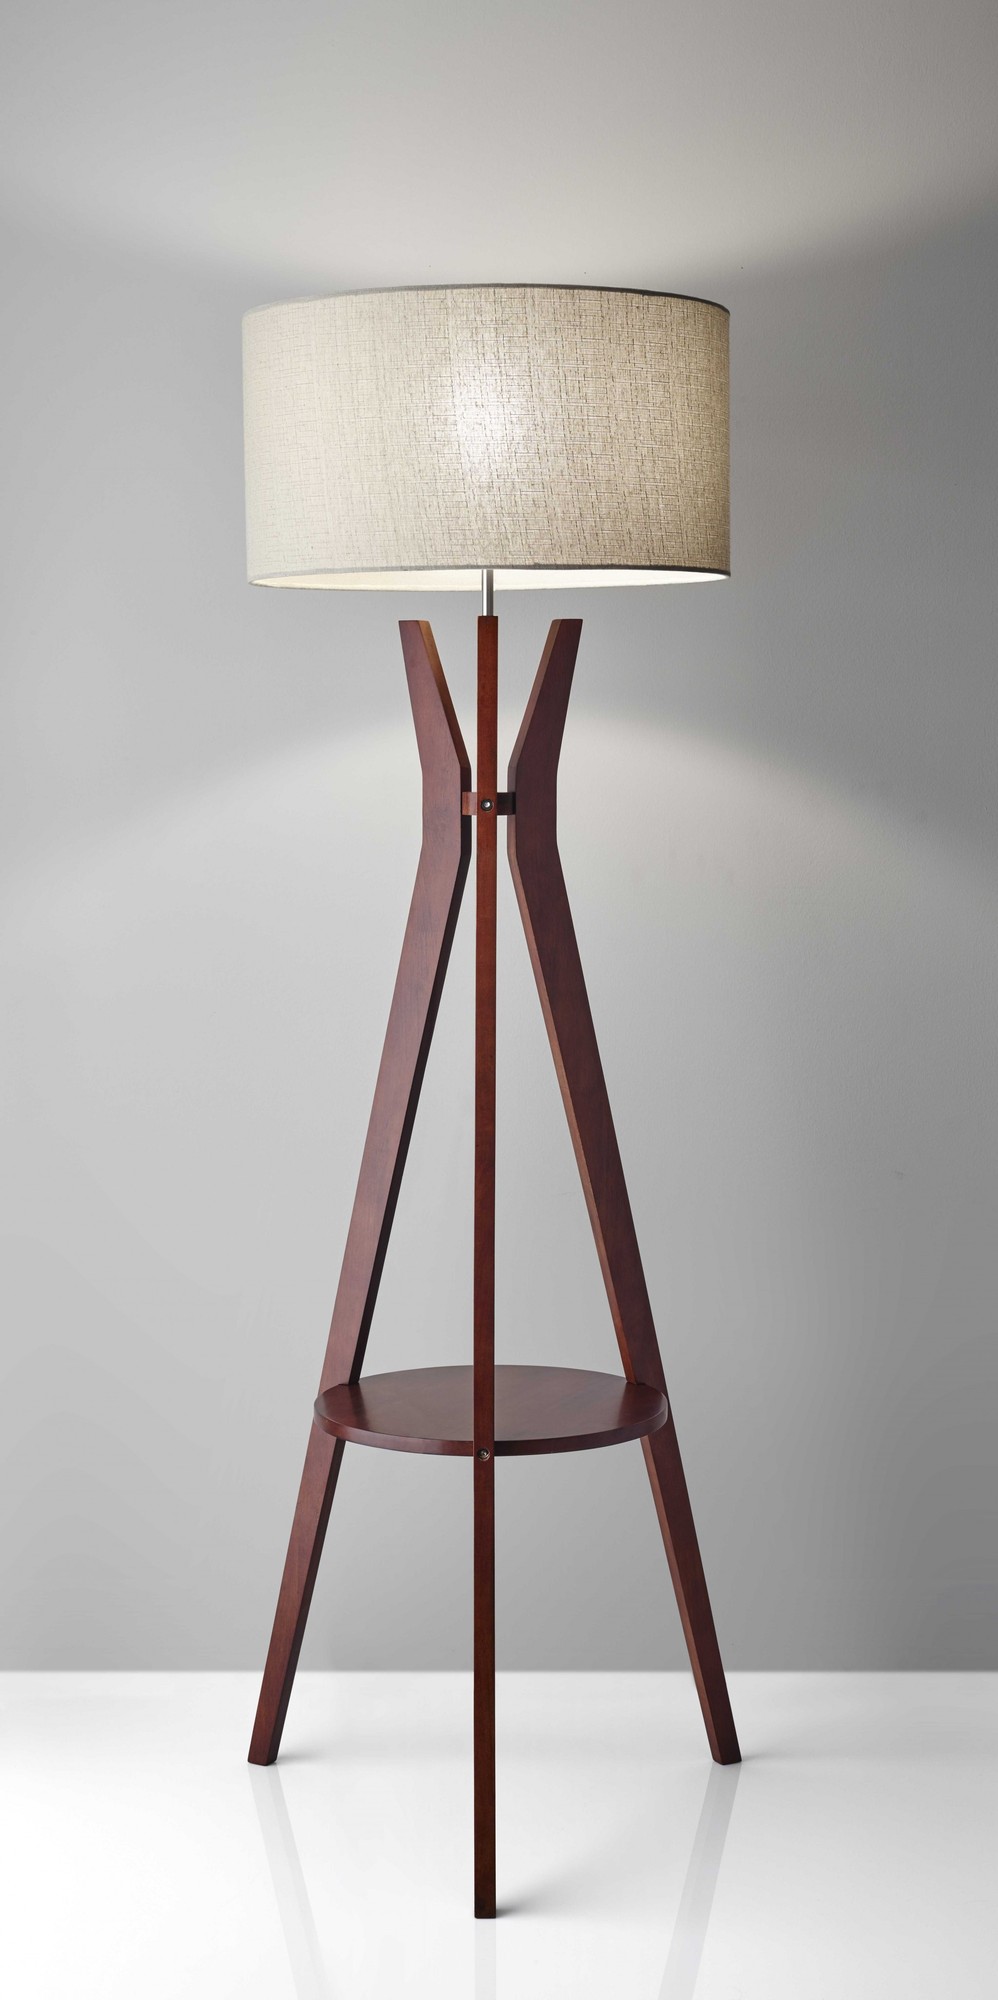 20" X 20" X 59.5" Walnut Wood Shelf Floor Lamp